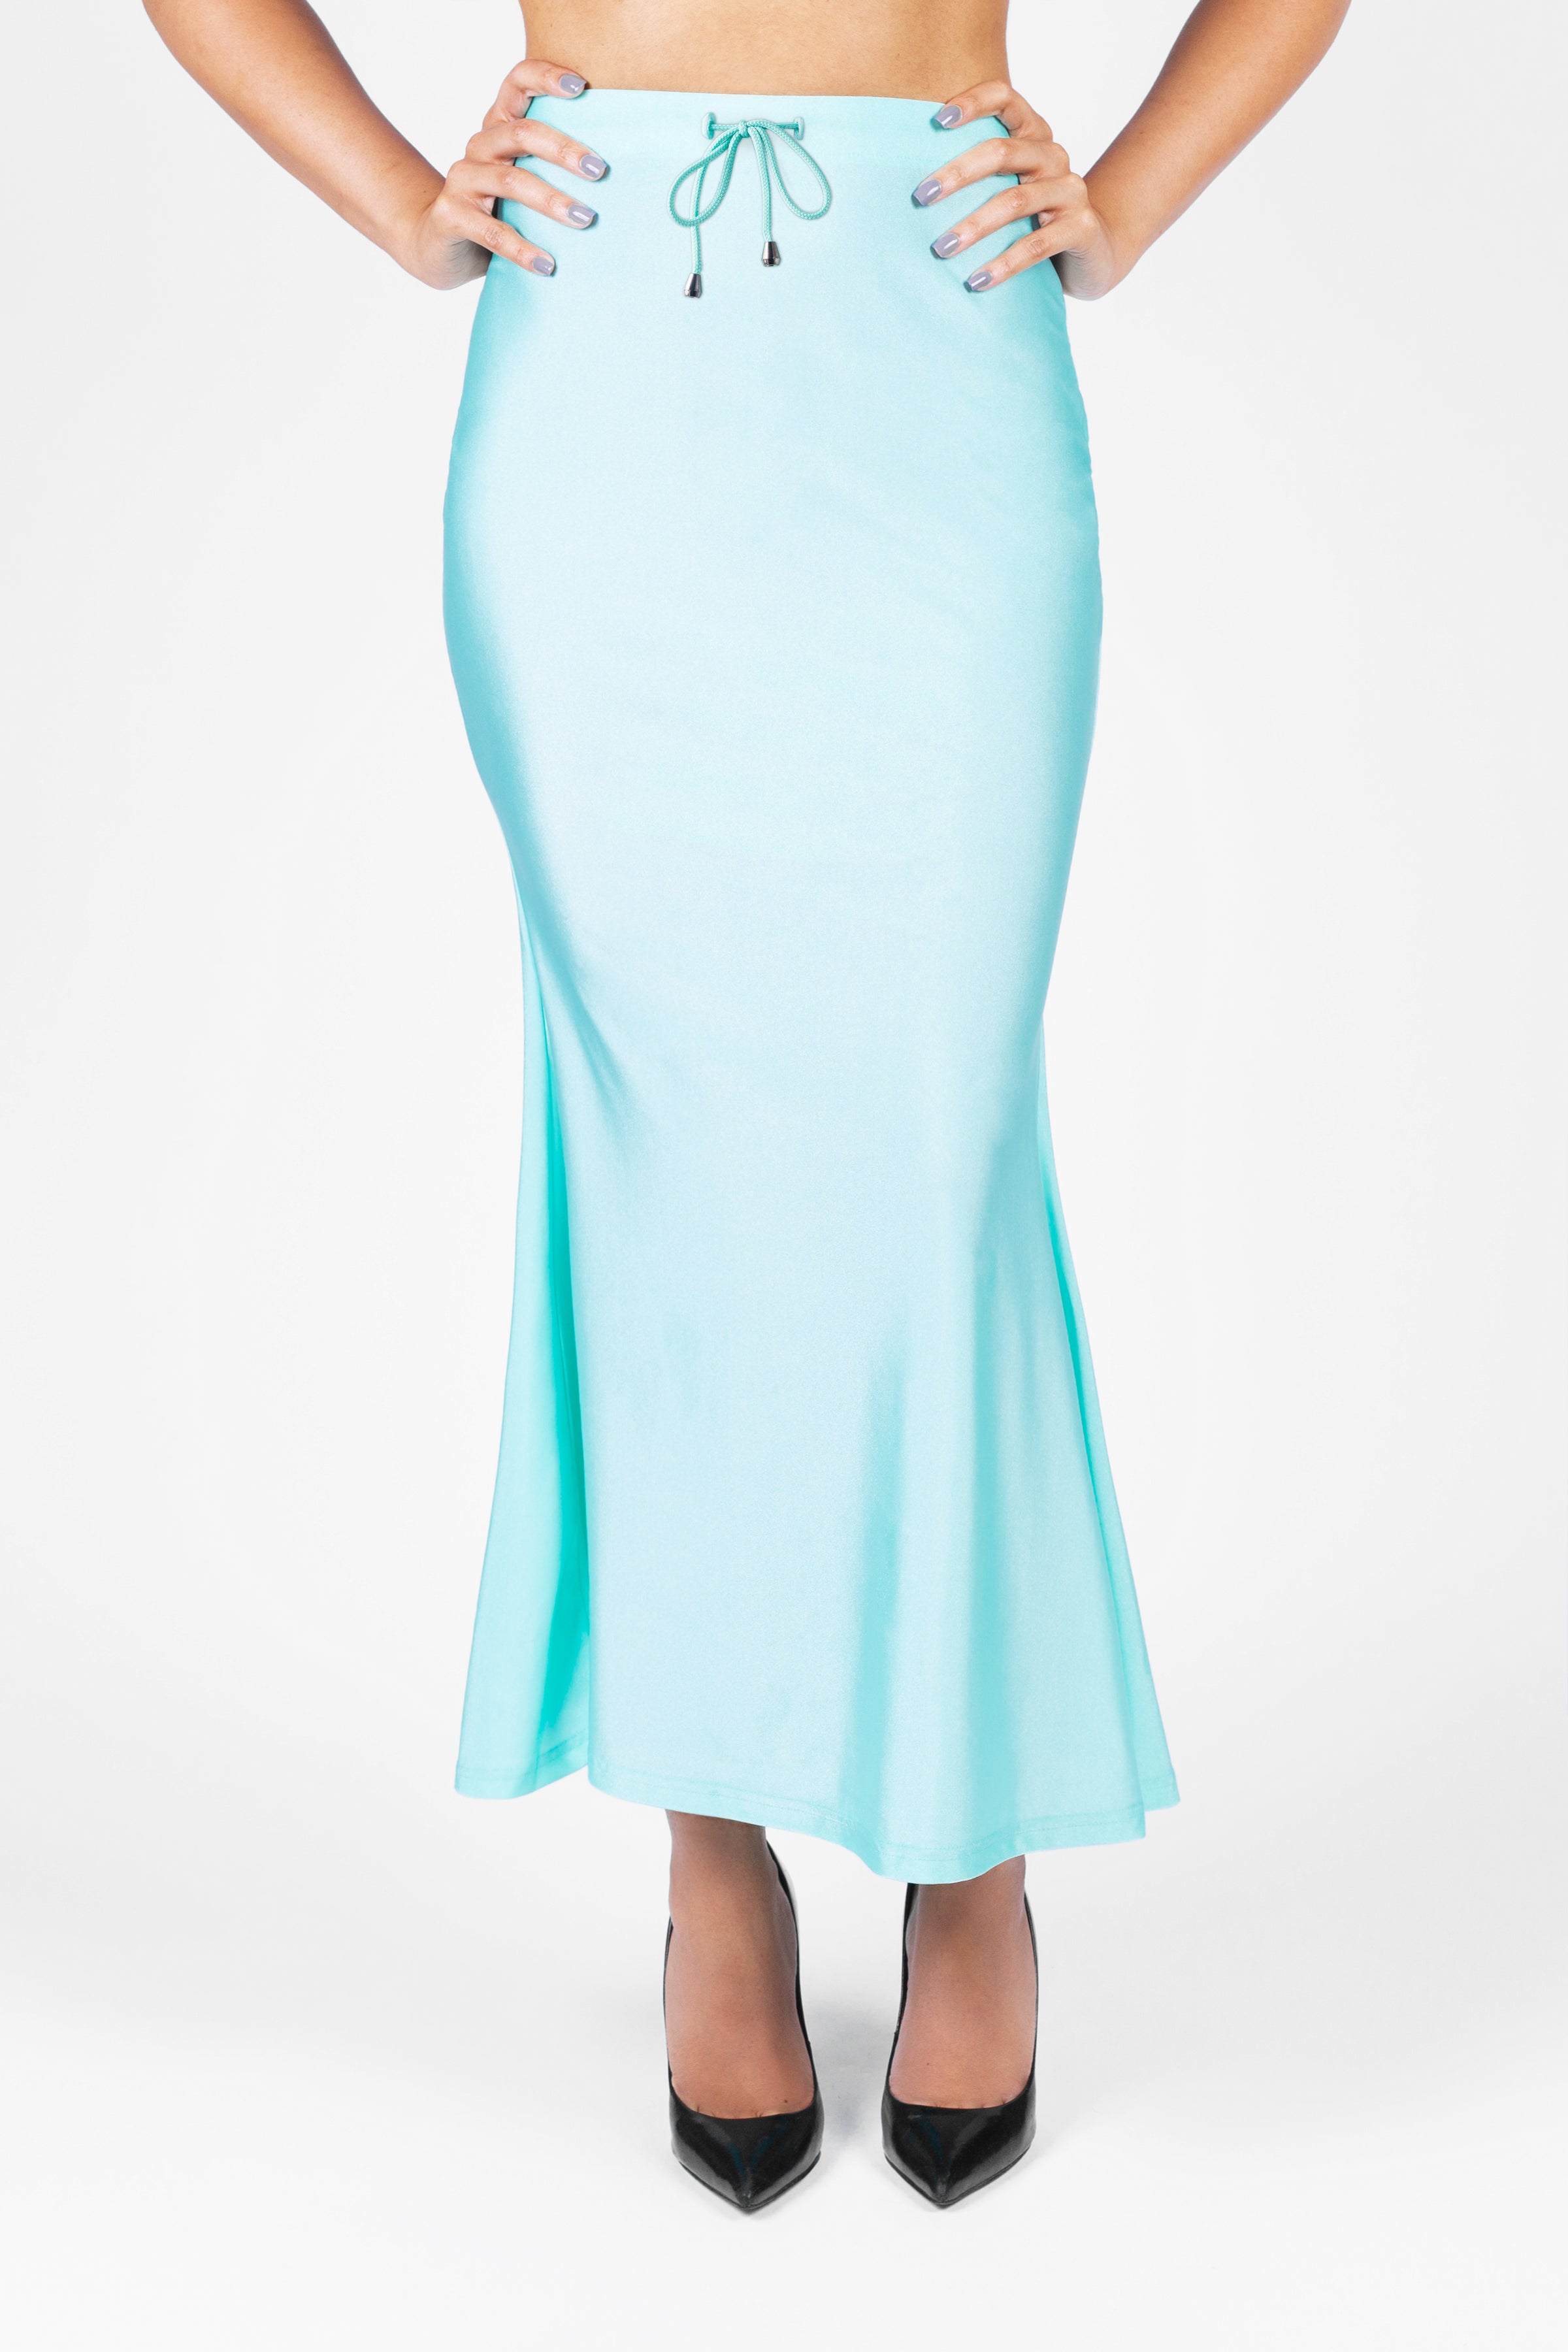 Blue Petticoat for Women, Cotton Straight Women Saree Shapewear